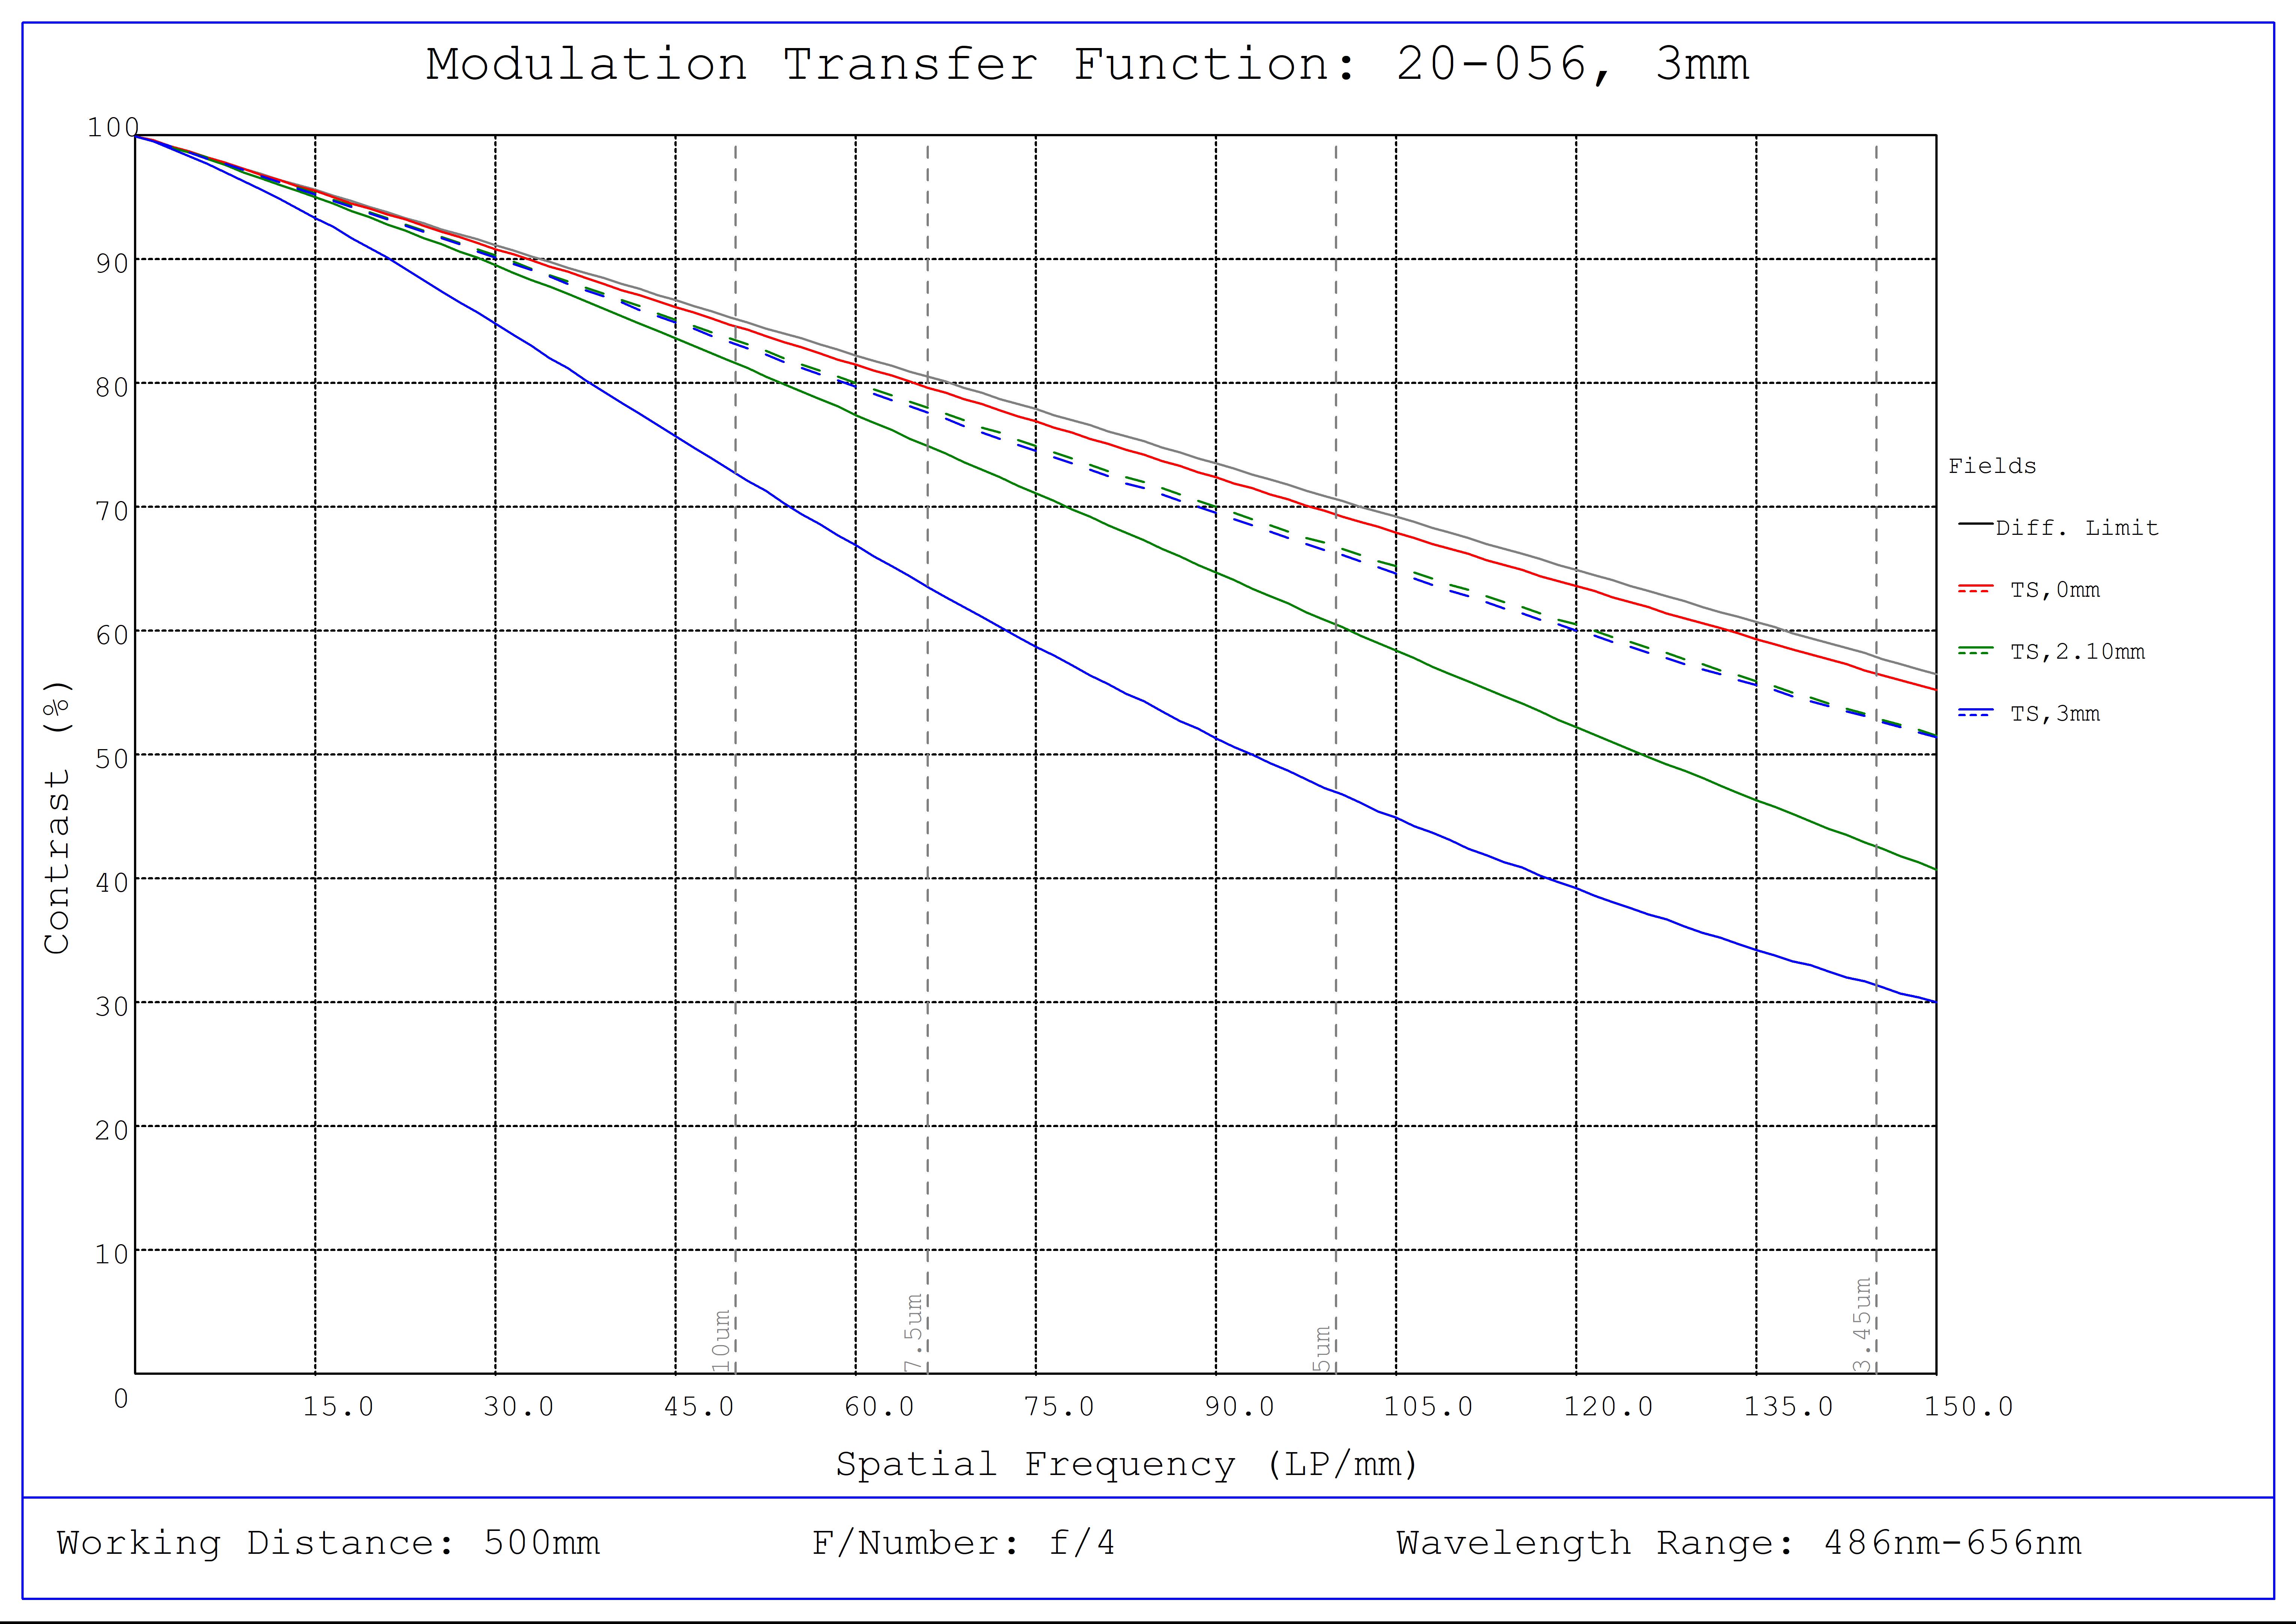 #20-056, 3mm FL f/4.0, IR-Cut Blue Series M12 Lens, Modulated Transfer Function (MTF) Plot, 500mm Working Distance, f4